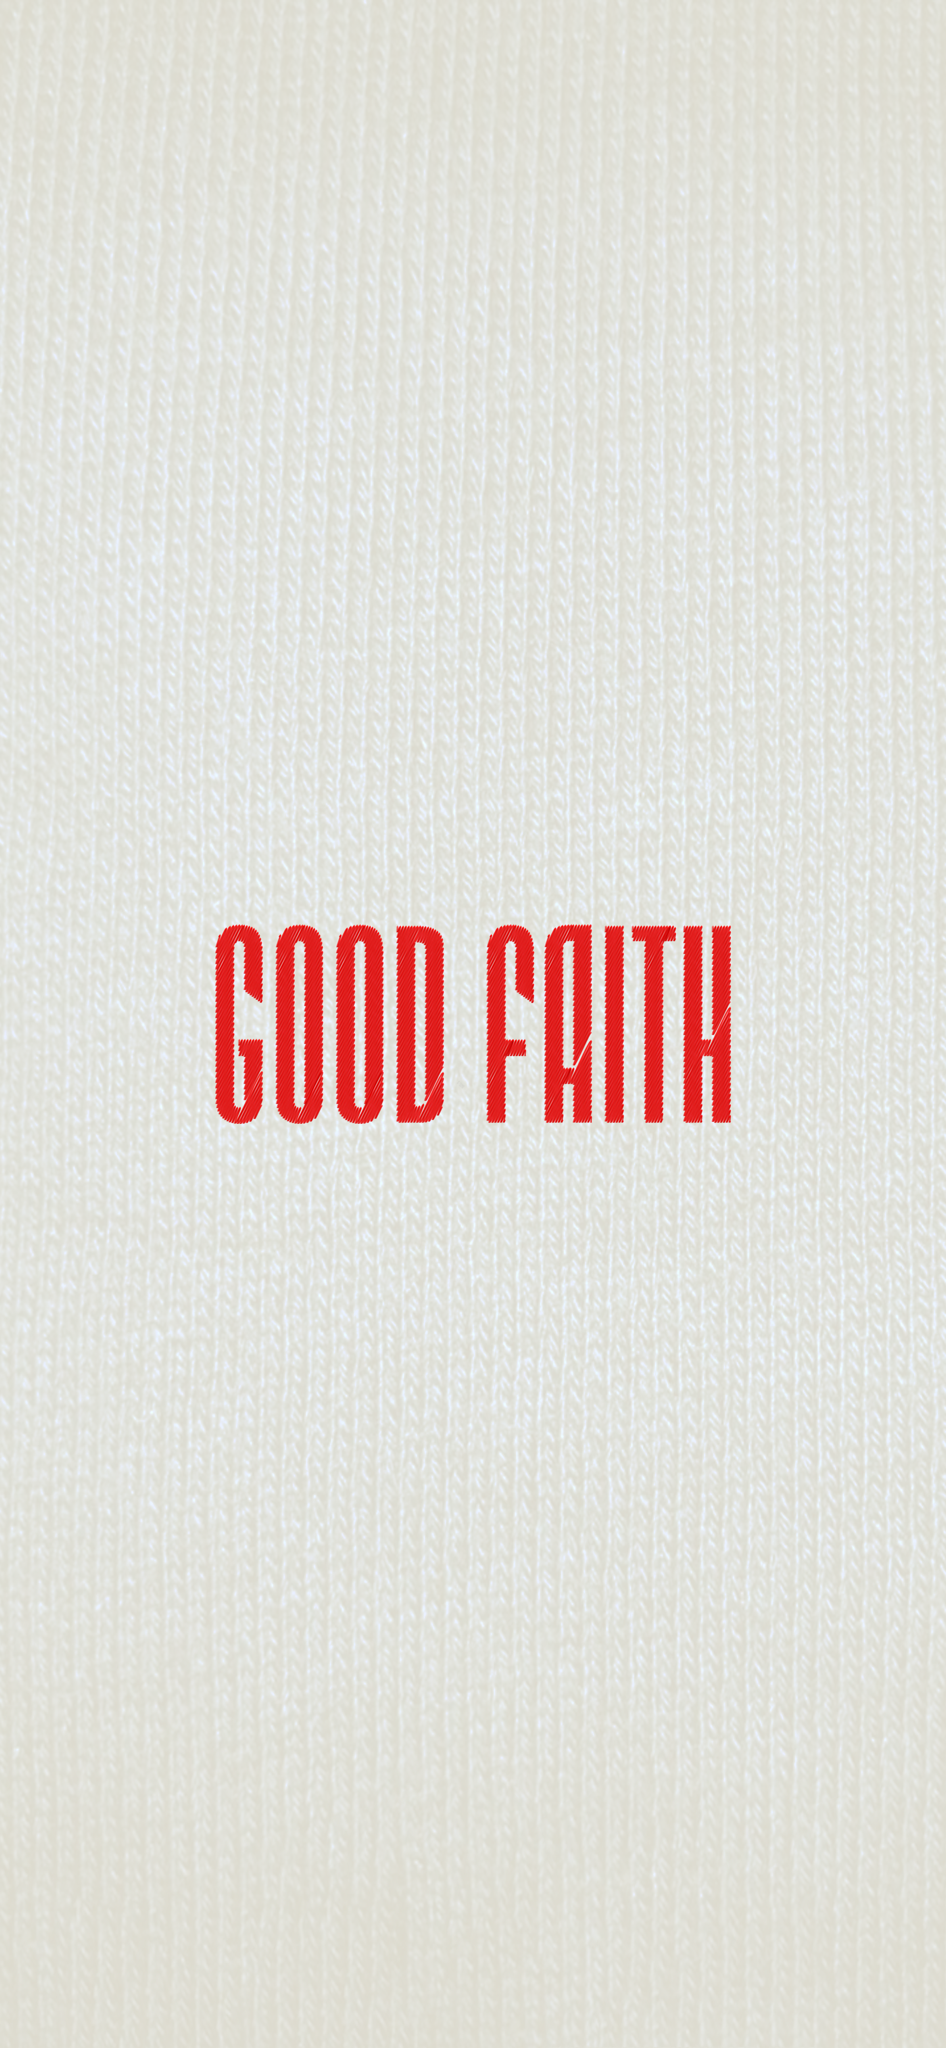 Madeon Good Faith Wallpapers